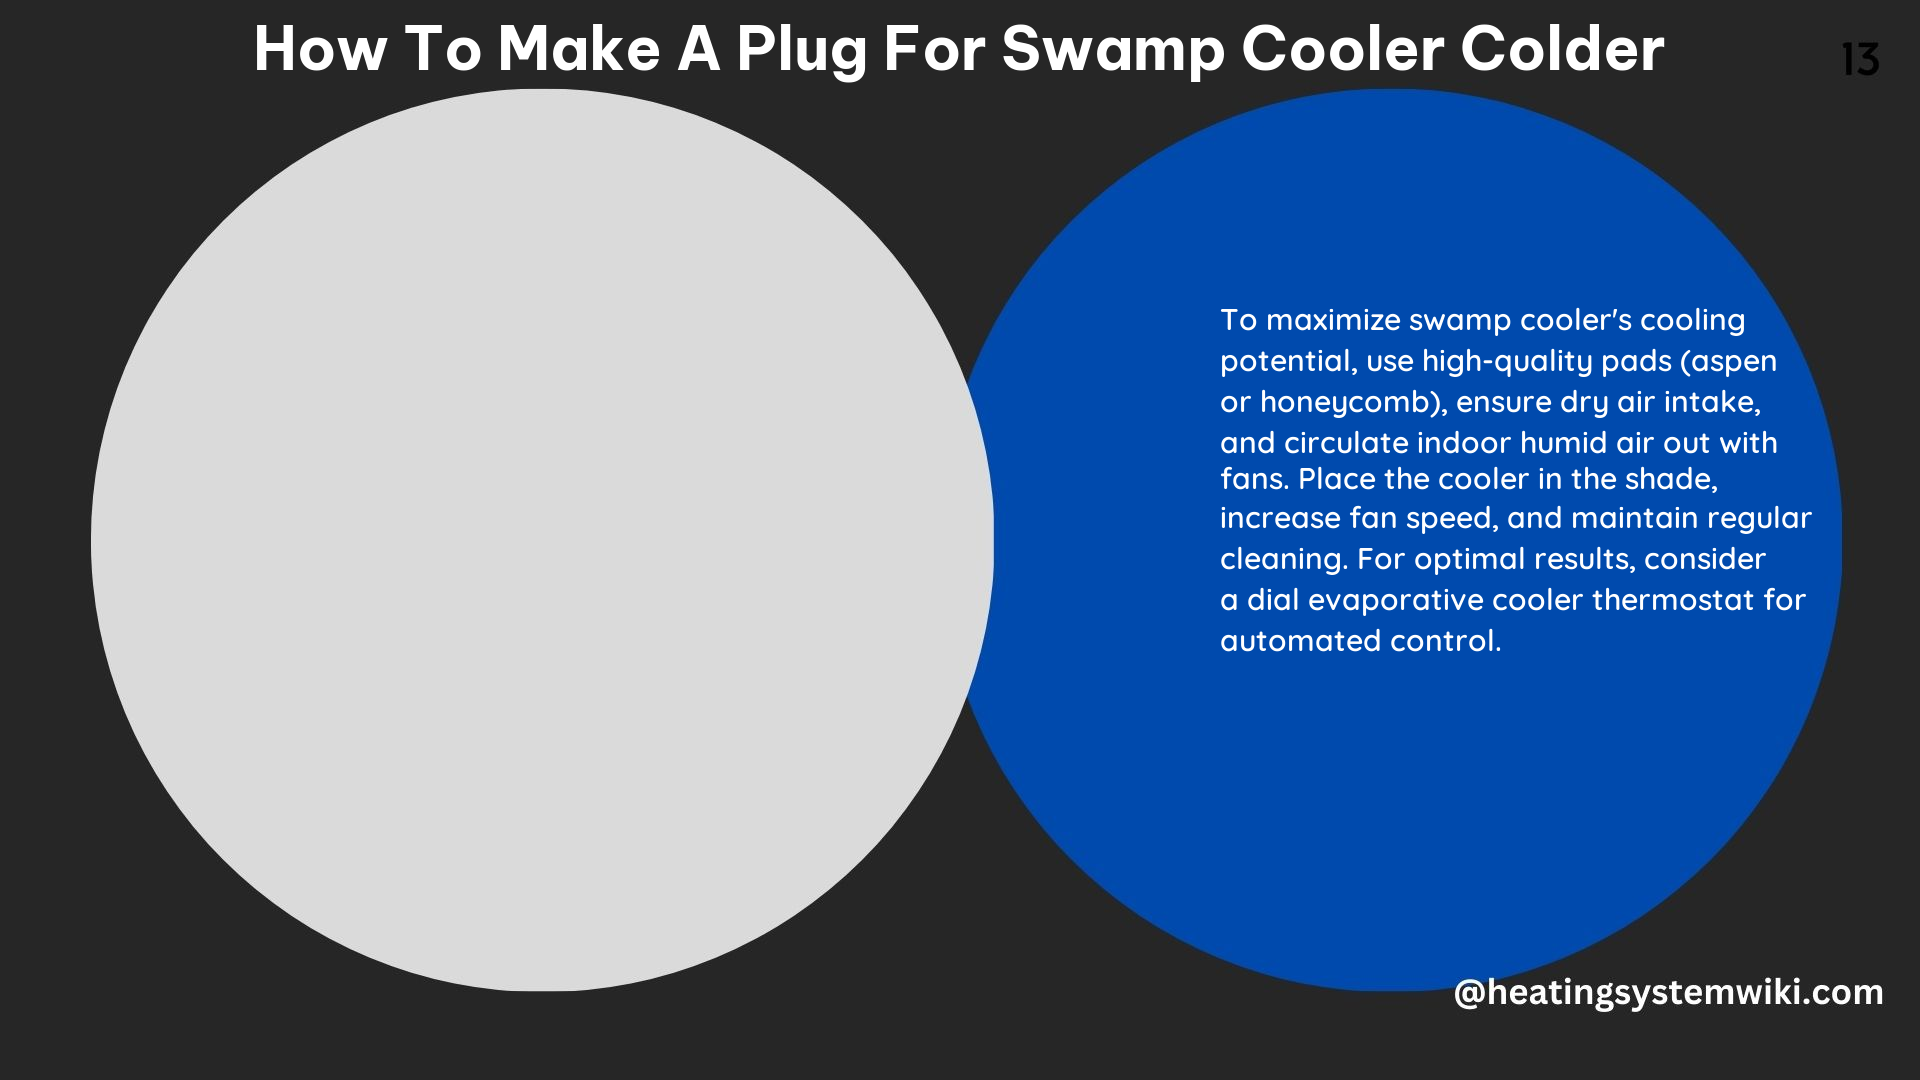 How to Make a Plug for Swamp Cooler Colder